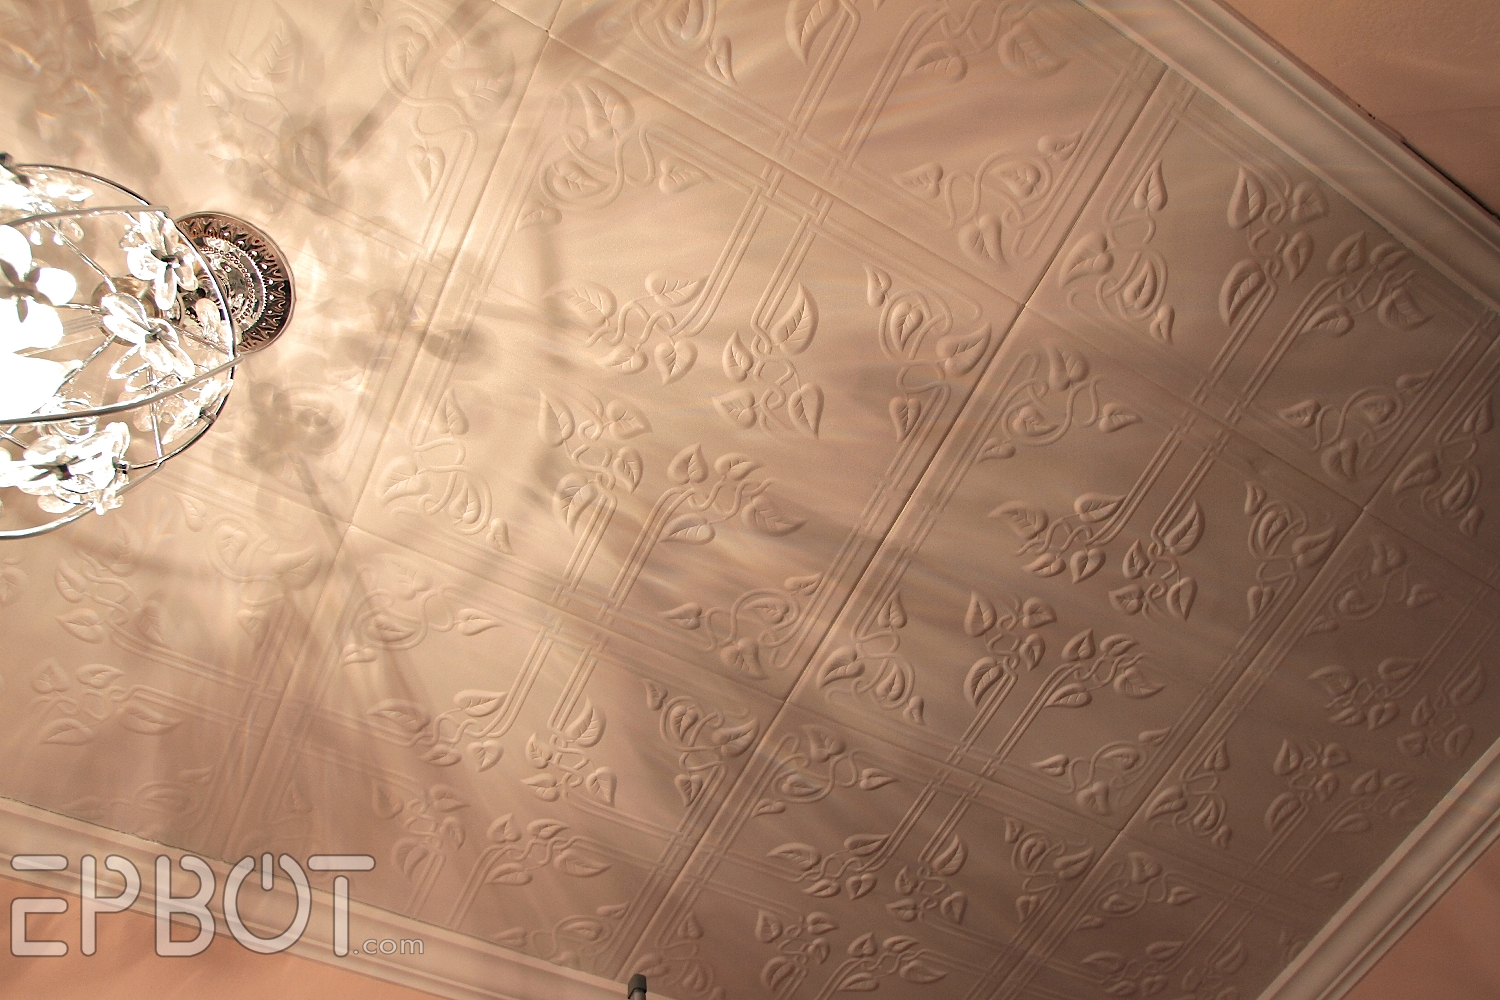 Ceiling Tiles Glue Over Popcorn Ceiling Tiles Glue Over Popcorn epbot diy faux tin tile ceiling 1500 X 1000